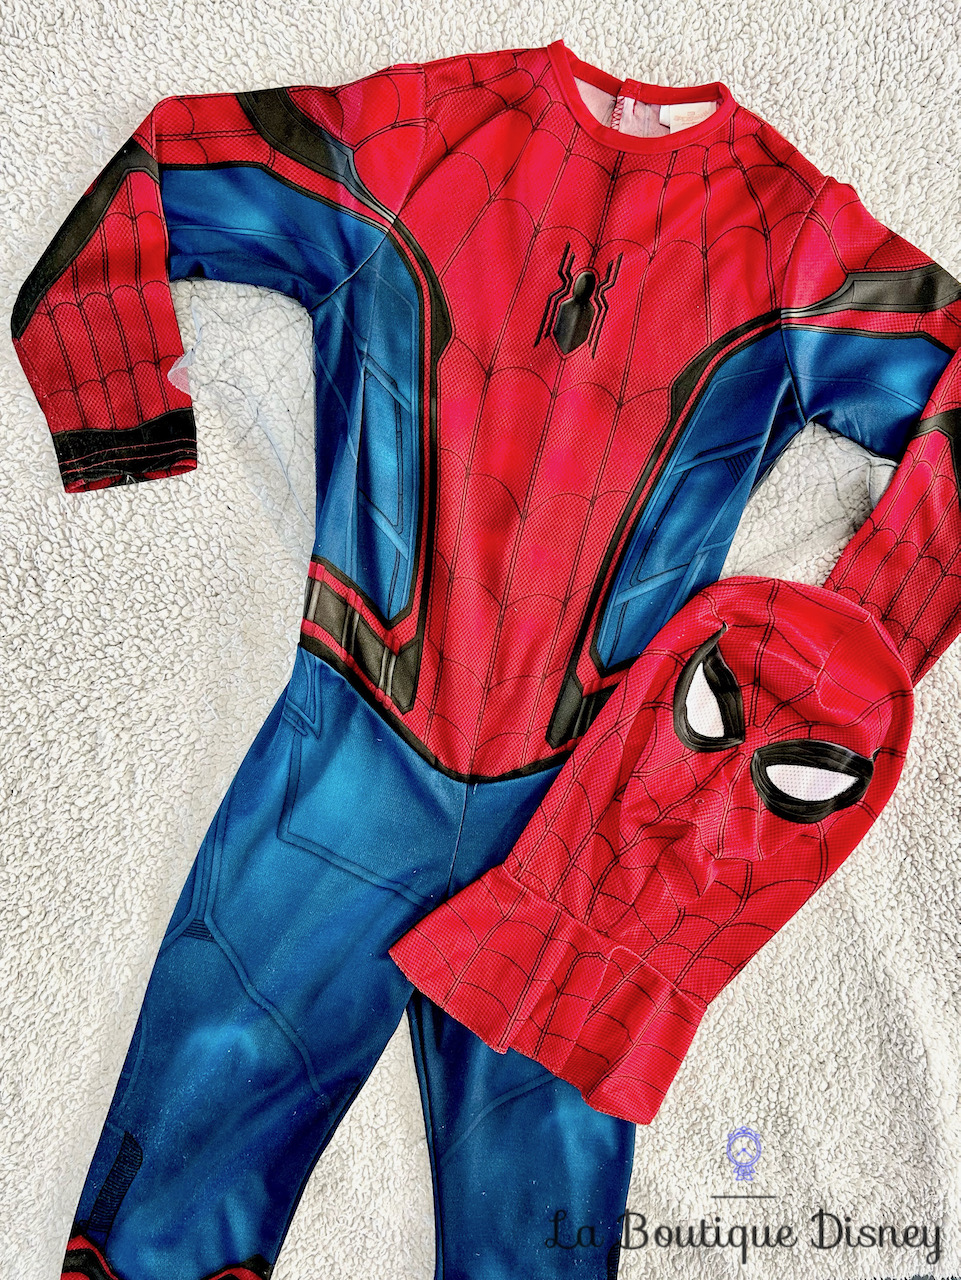 Déguisement Spider Man Homecoming Marvel Disney Rubies taille 5/6 ans combinaison bleu rouge masque